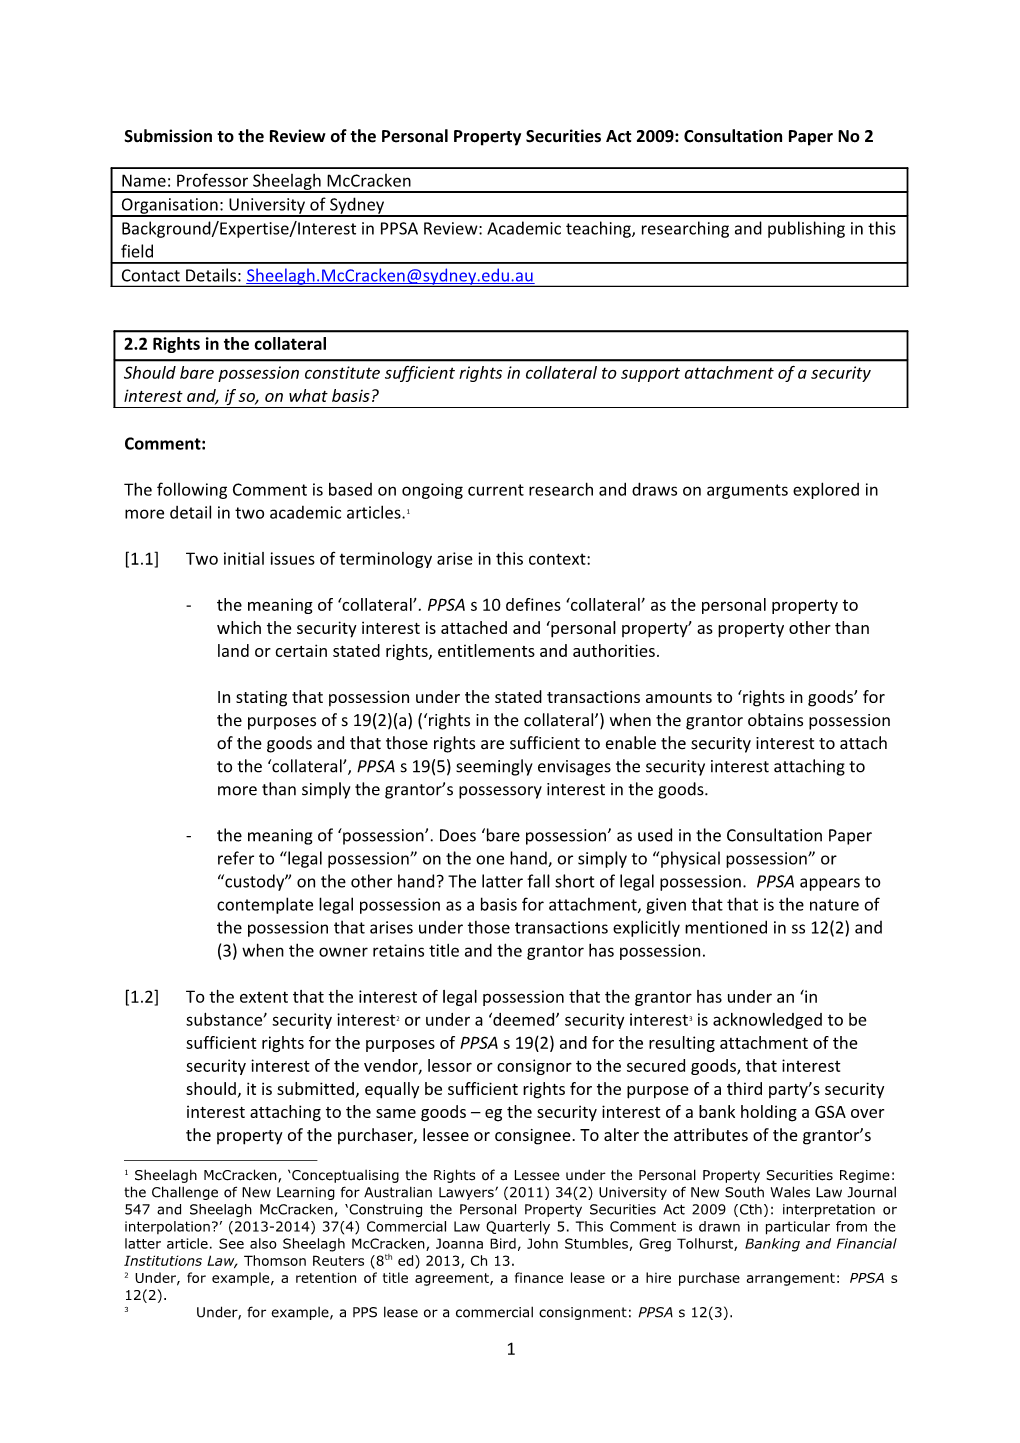 PPS Review Consultation - Paper 2 - Sheelagh Mccracken - University of Sydney - CP#2 Response